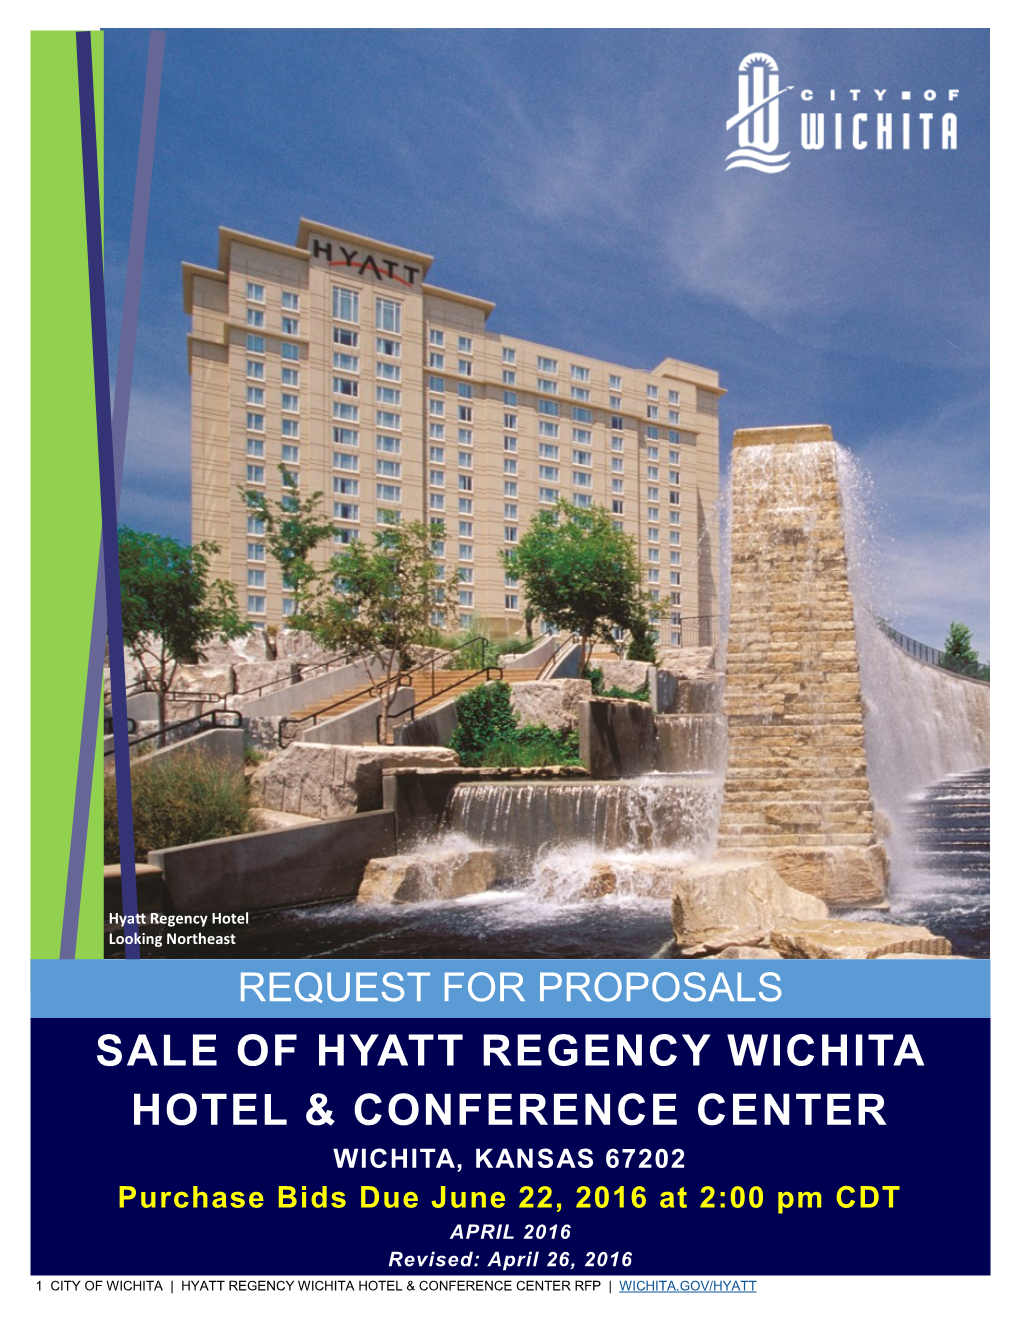 Sale of Hyatt Regency Wichita Hotel & Conference Center